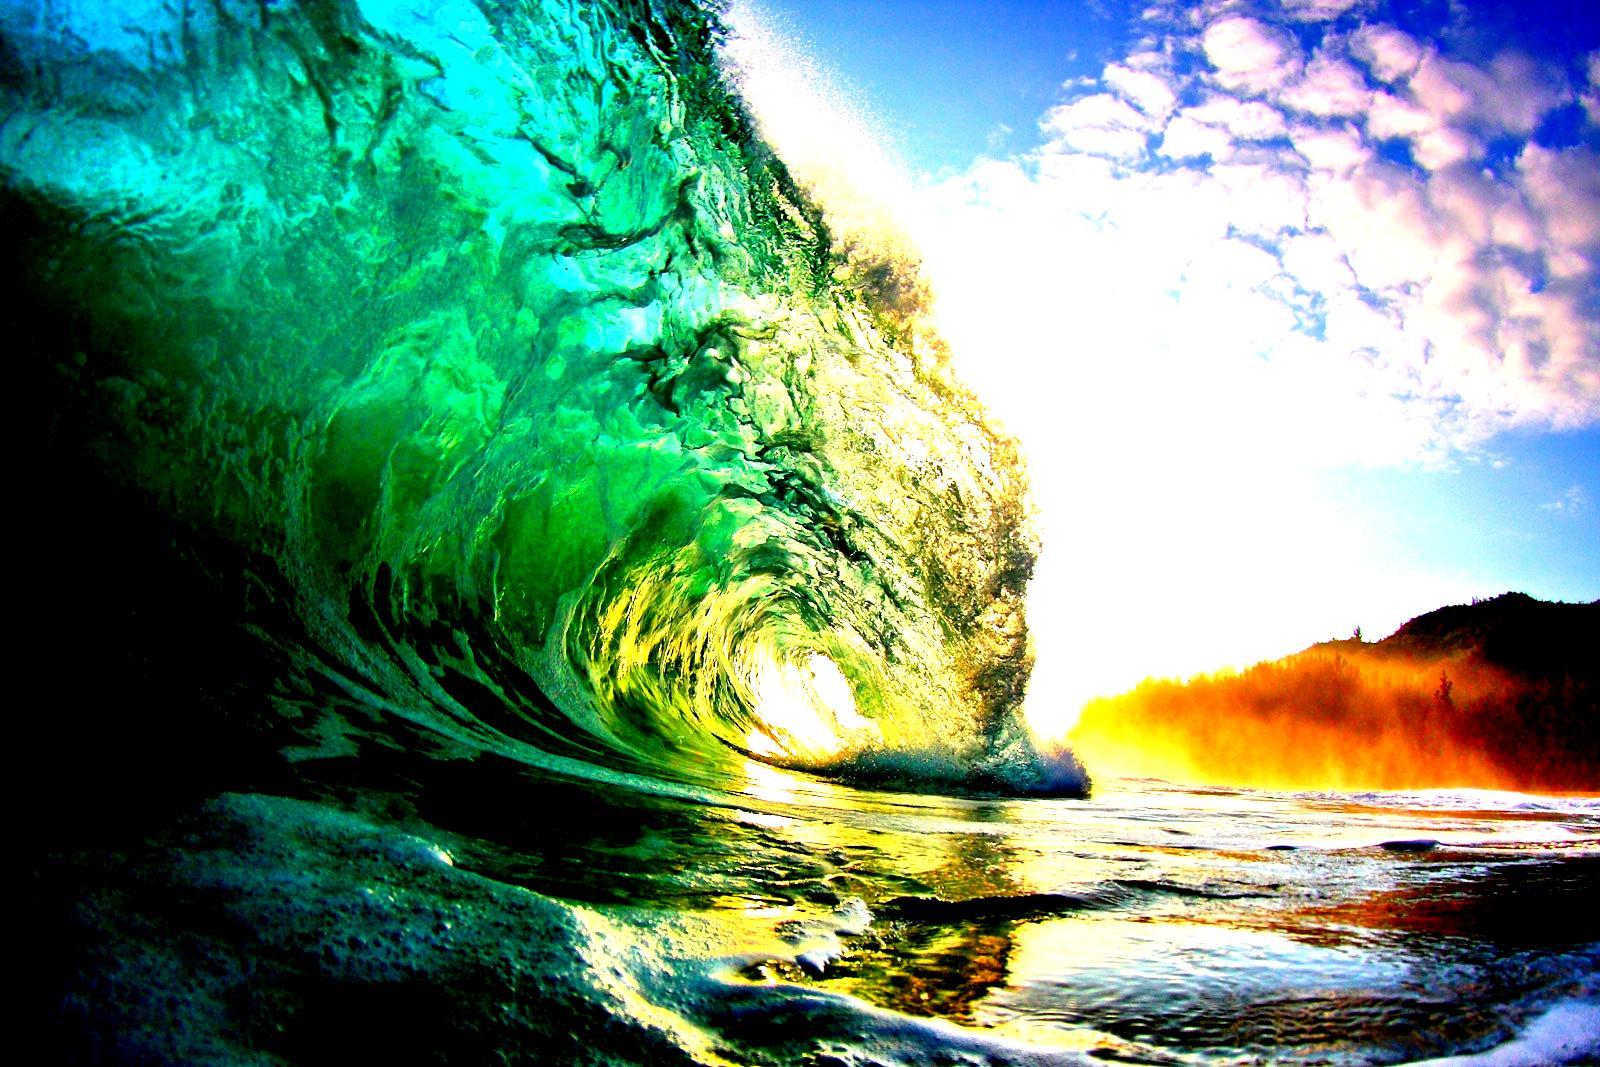 Hawaii Waves Wallpapers - Top Free Hawaii Waves Backgrounds ...